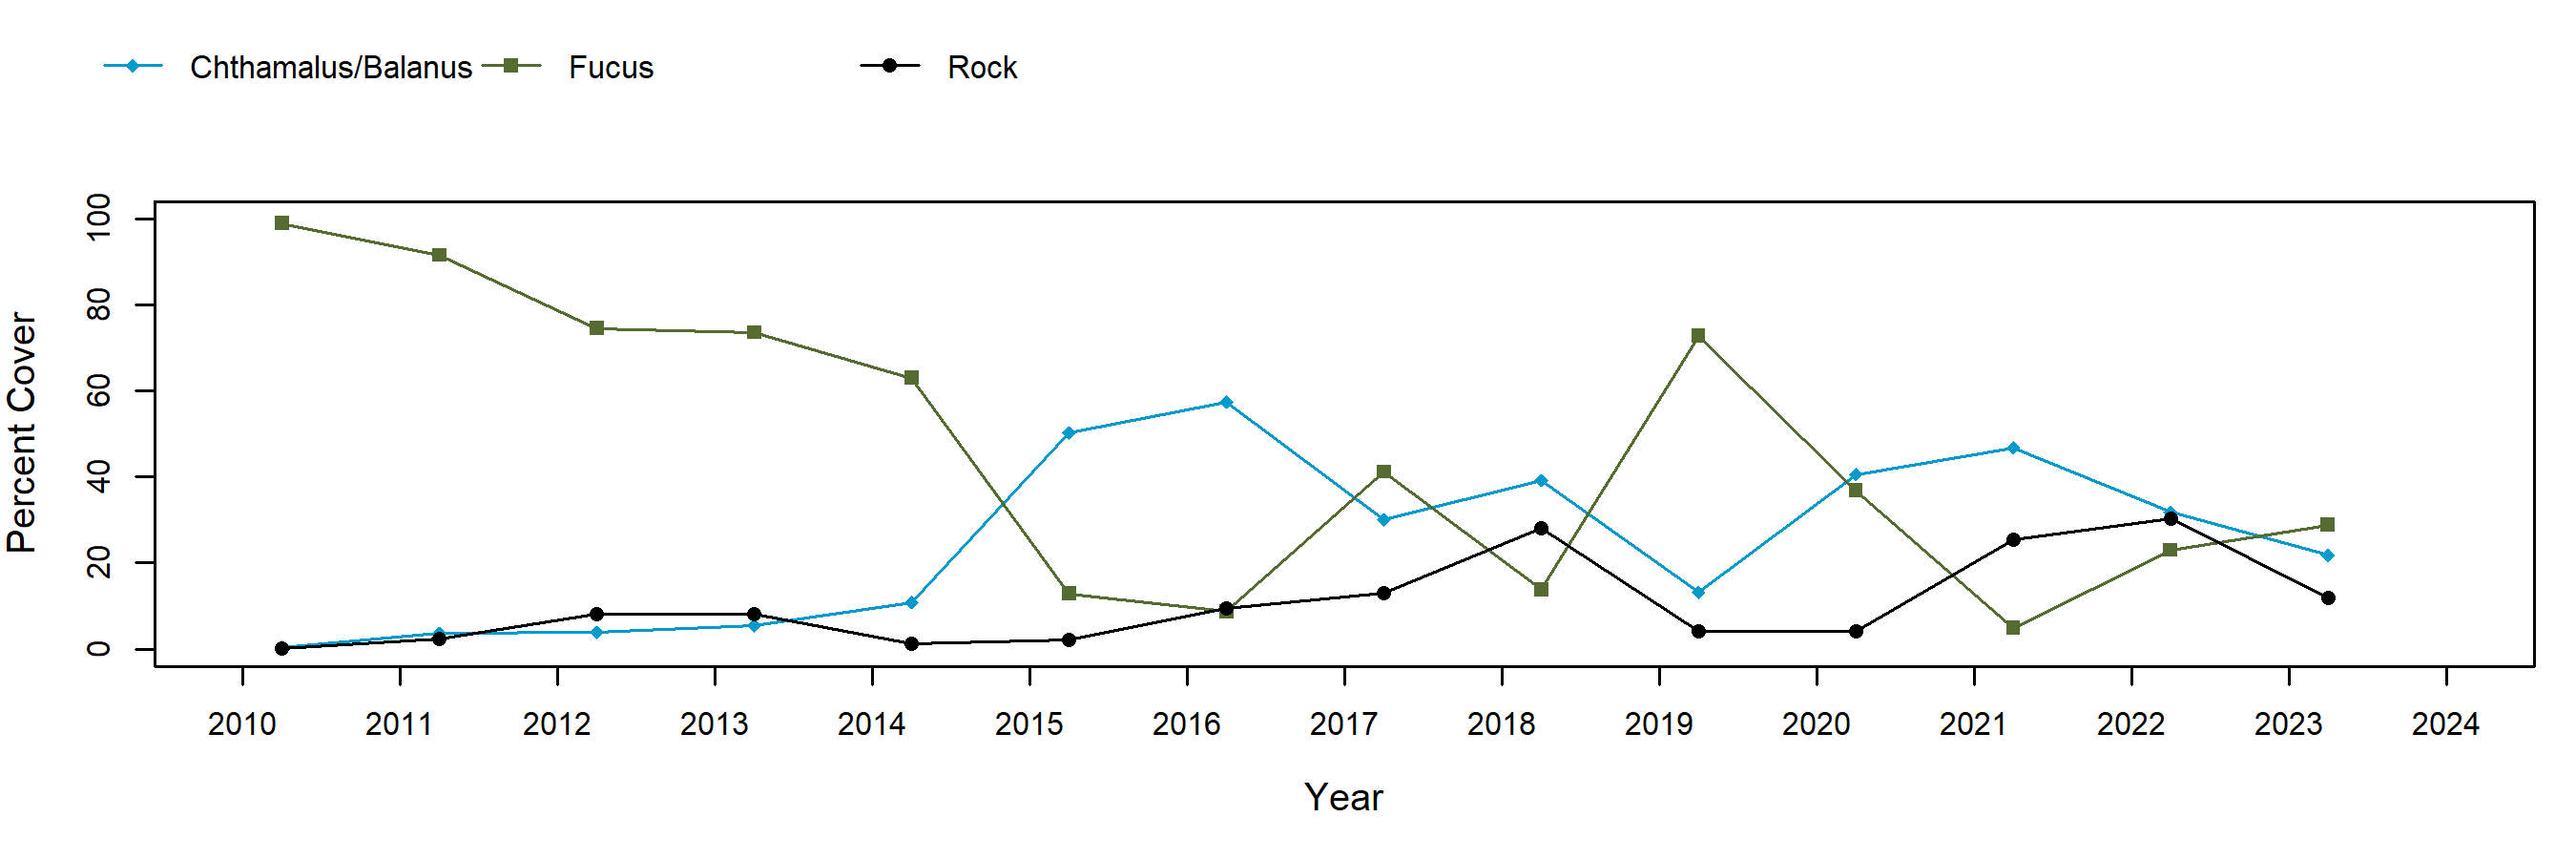 Post Point fucus trend plot